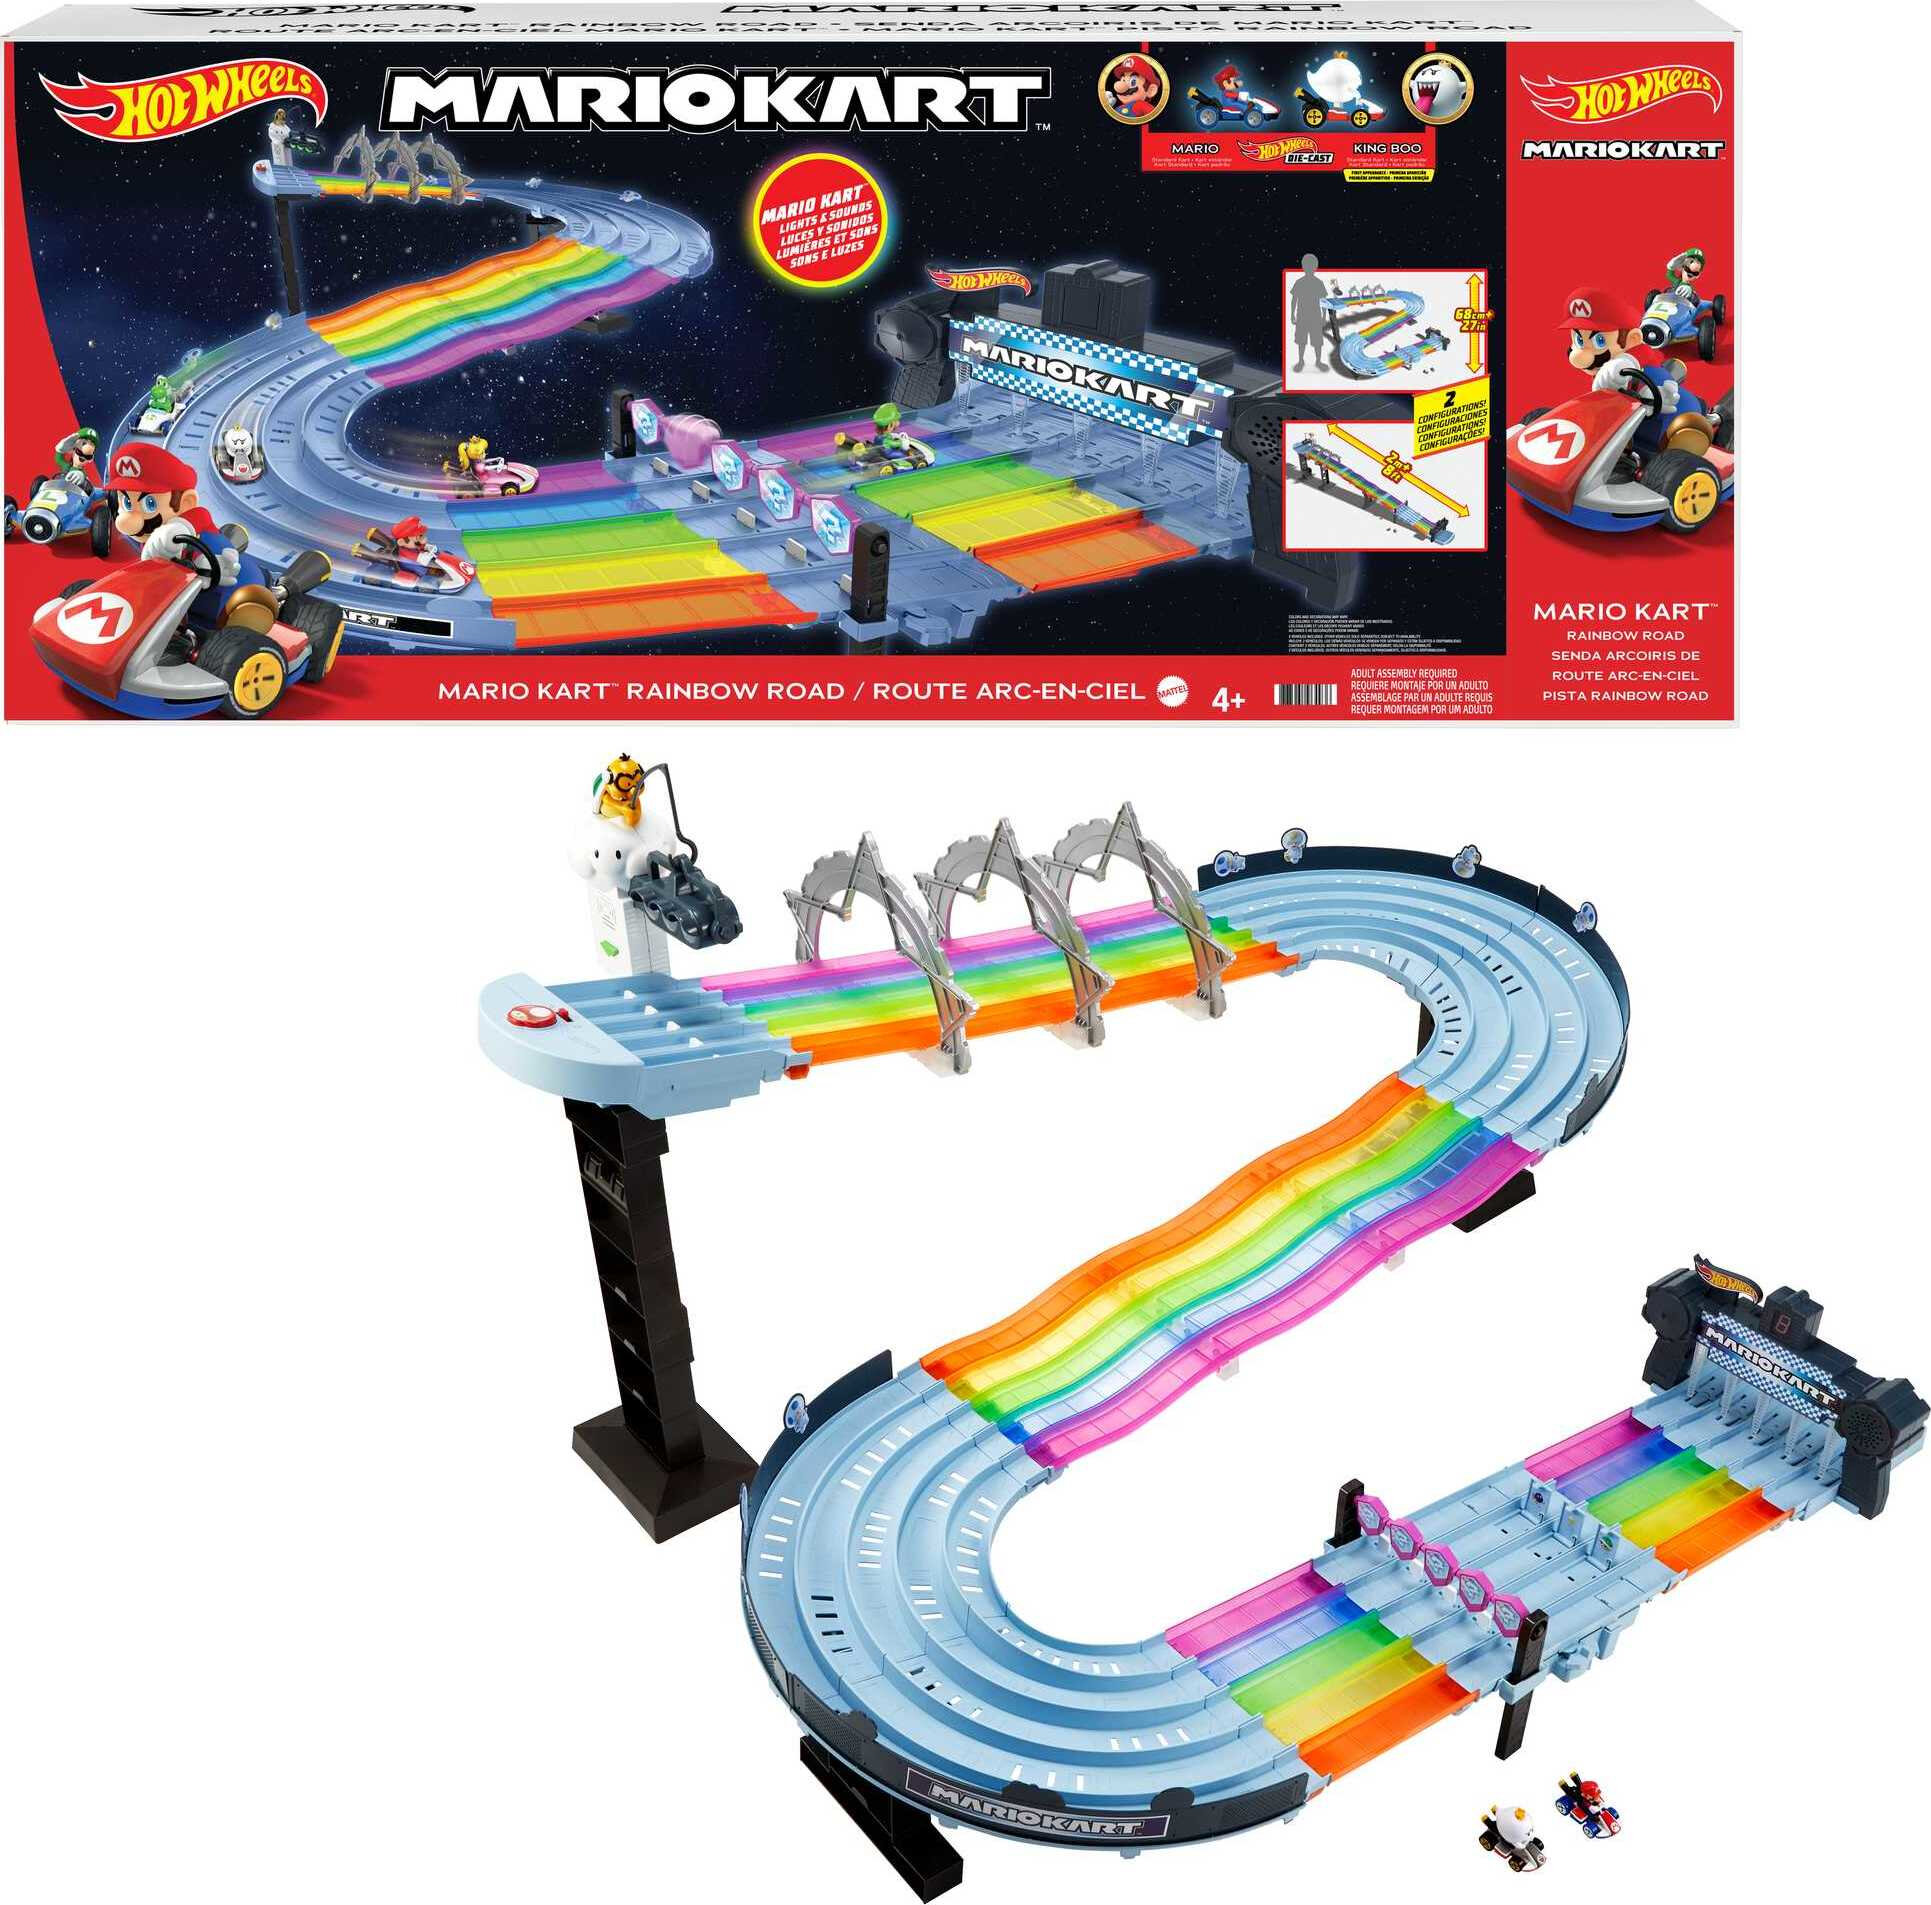 Hot Wheels Mario Kart Rainbow Road Raceway Set with 2 1:64 Scale Vehicles - image 1 of 7